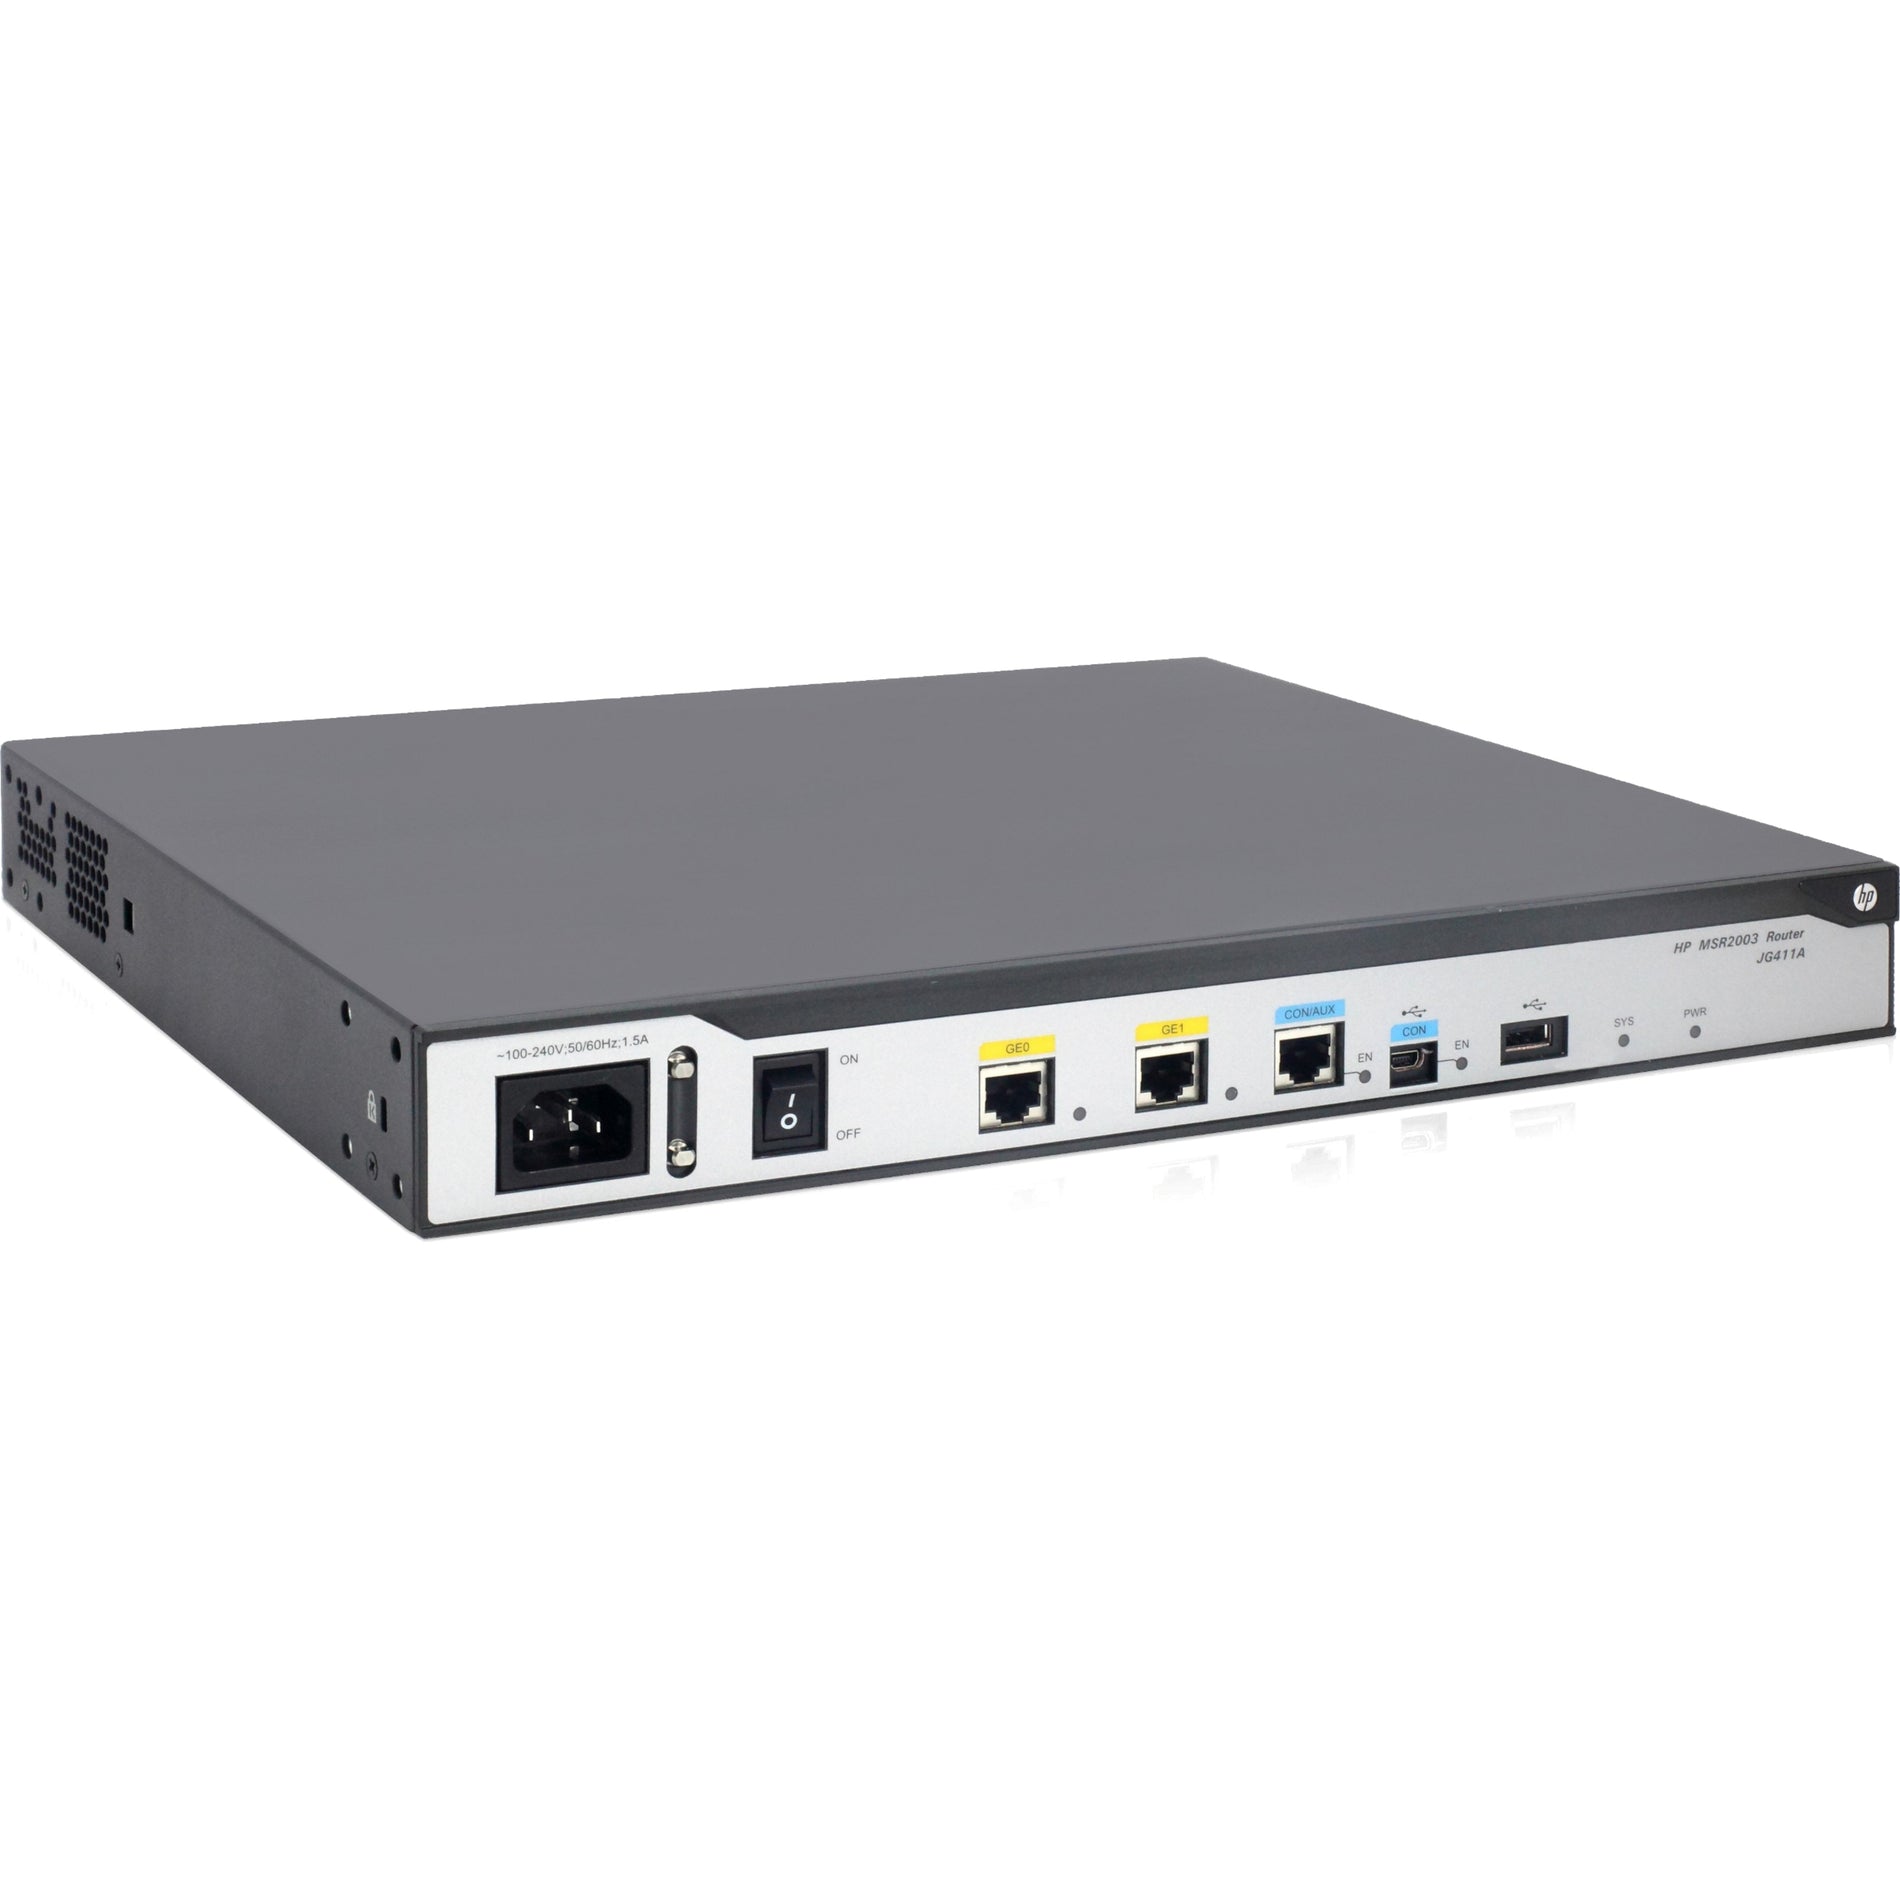 HPE MSR2003 AC Router, 1GB RAM, 256MB Flash Memory, Gigabit Ethernet